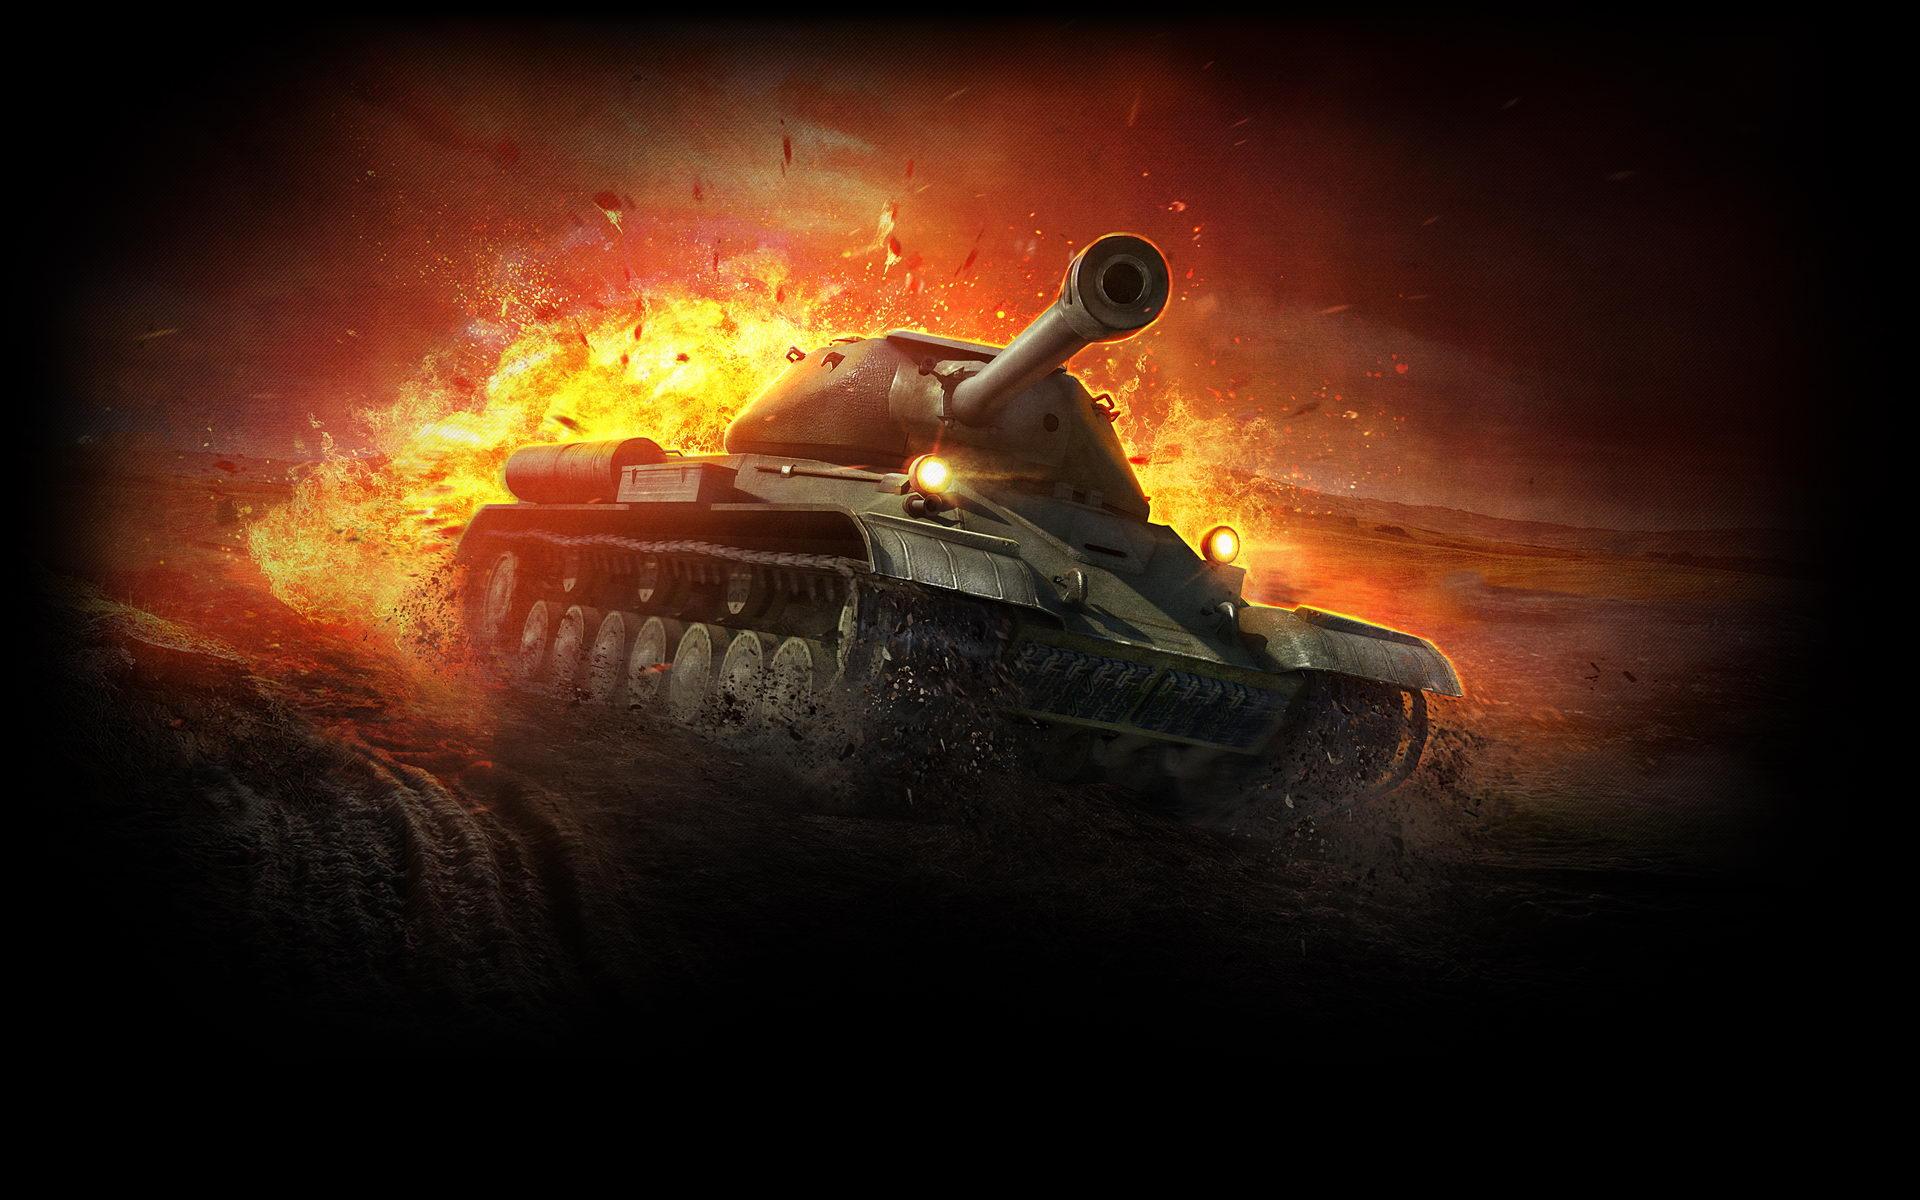 Orld of Tanks Logo Vecto HD Wallpaper, Background Image